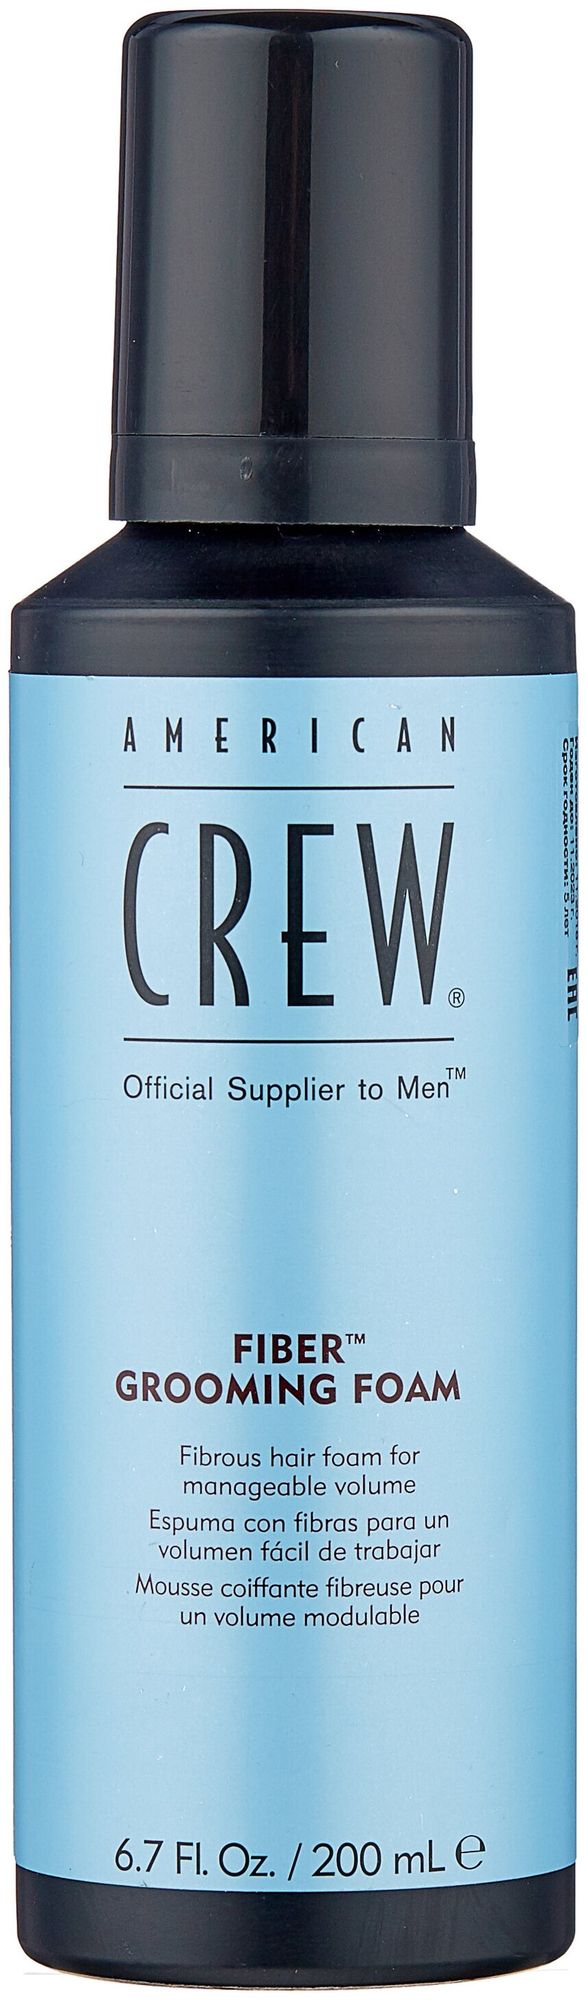 

Пена для укладки волос American Crew Fiber Grooming Foam 200мл